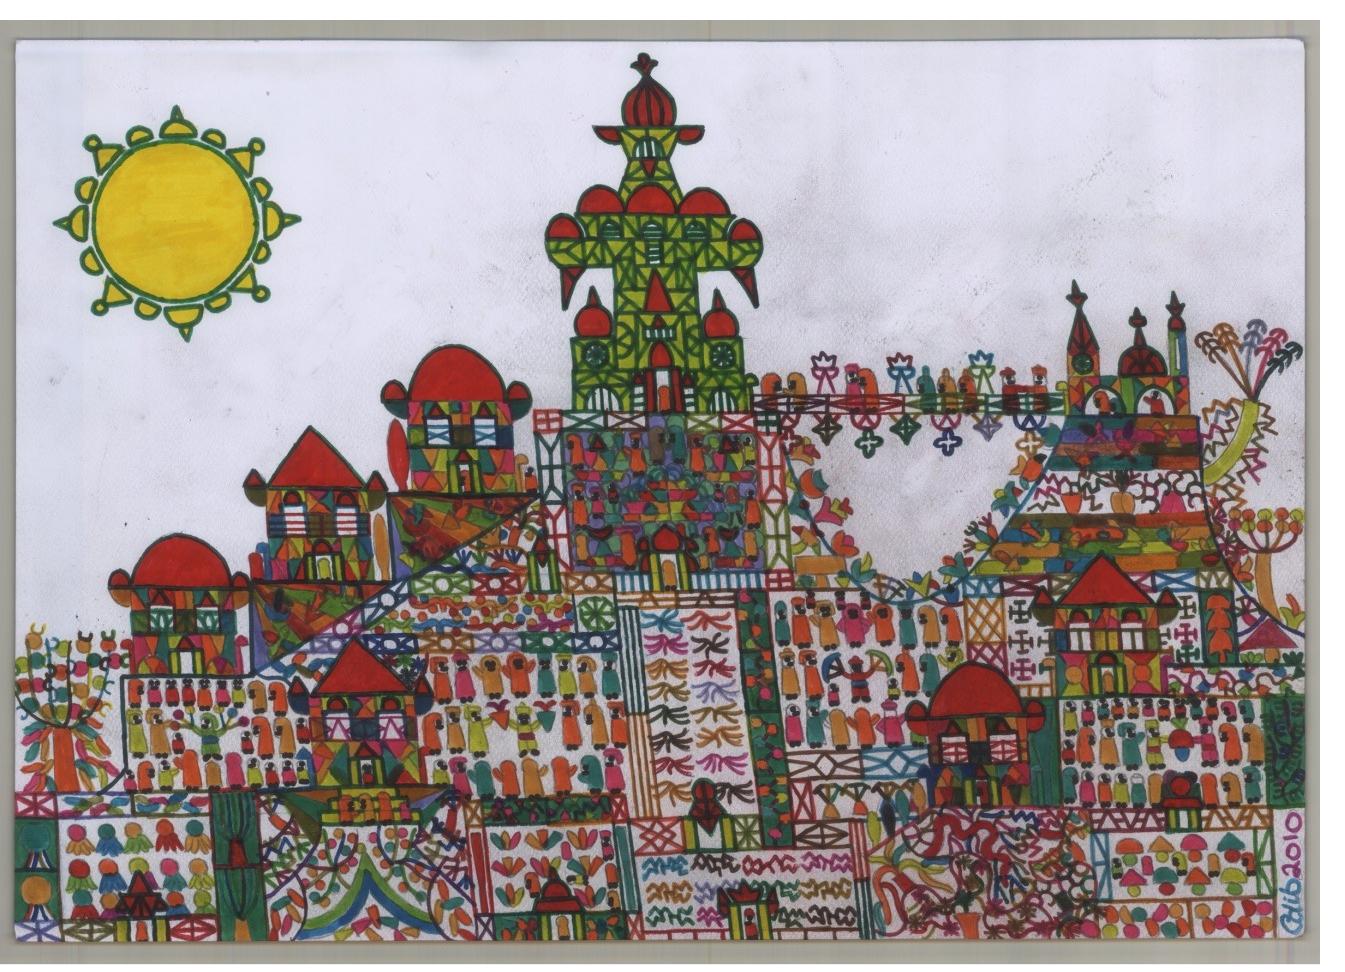 Adib Fattal - 380 "Selling Lolipop in a Village" - 30cm x 50cm - ink on paper - 2010